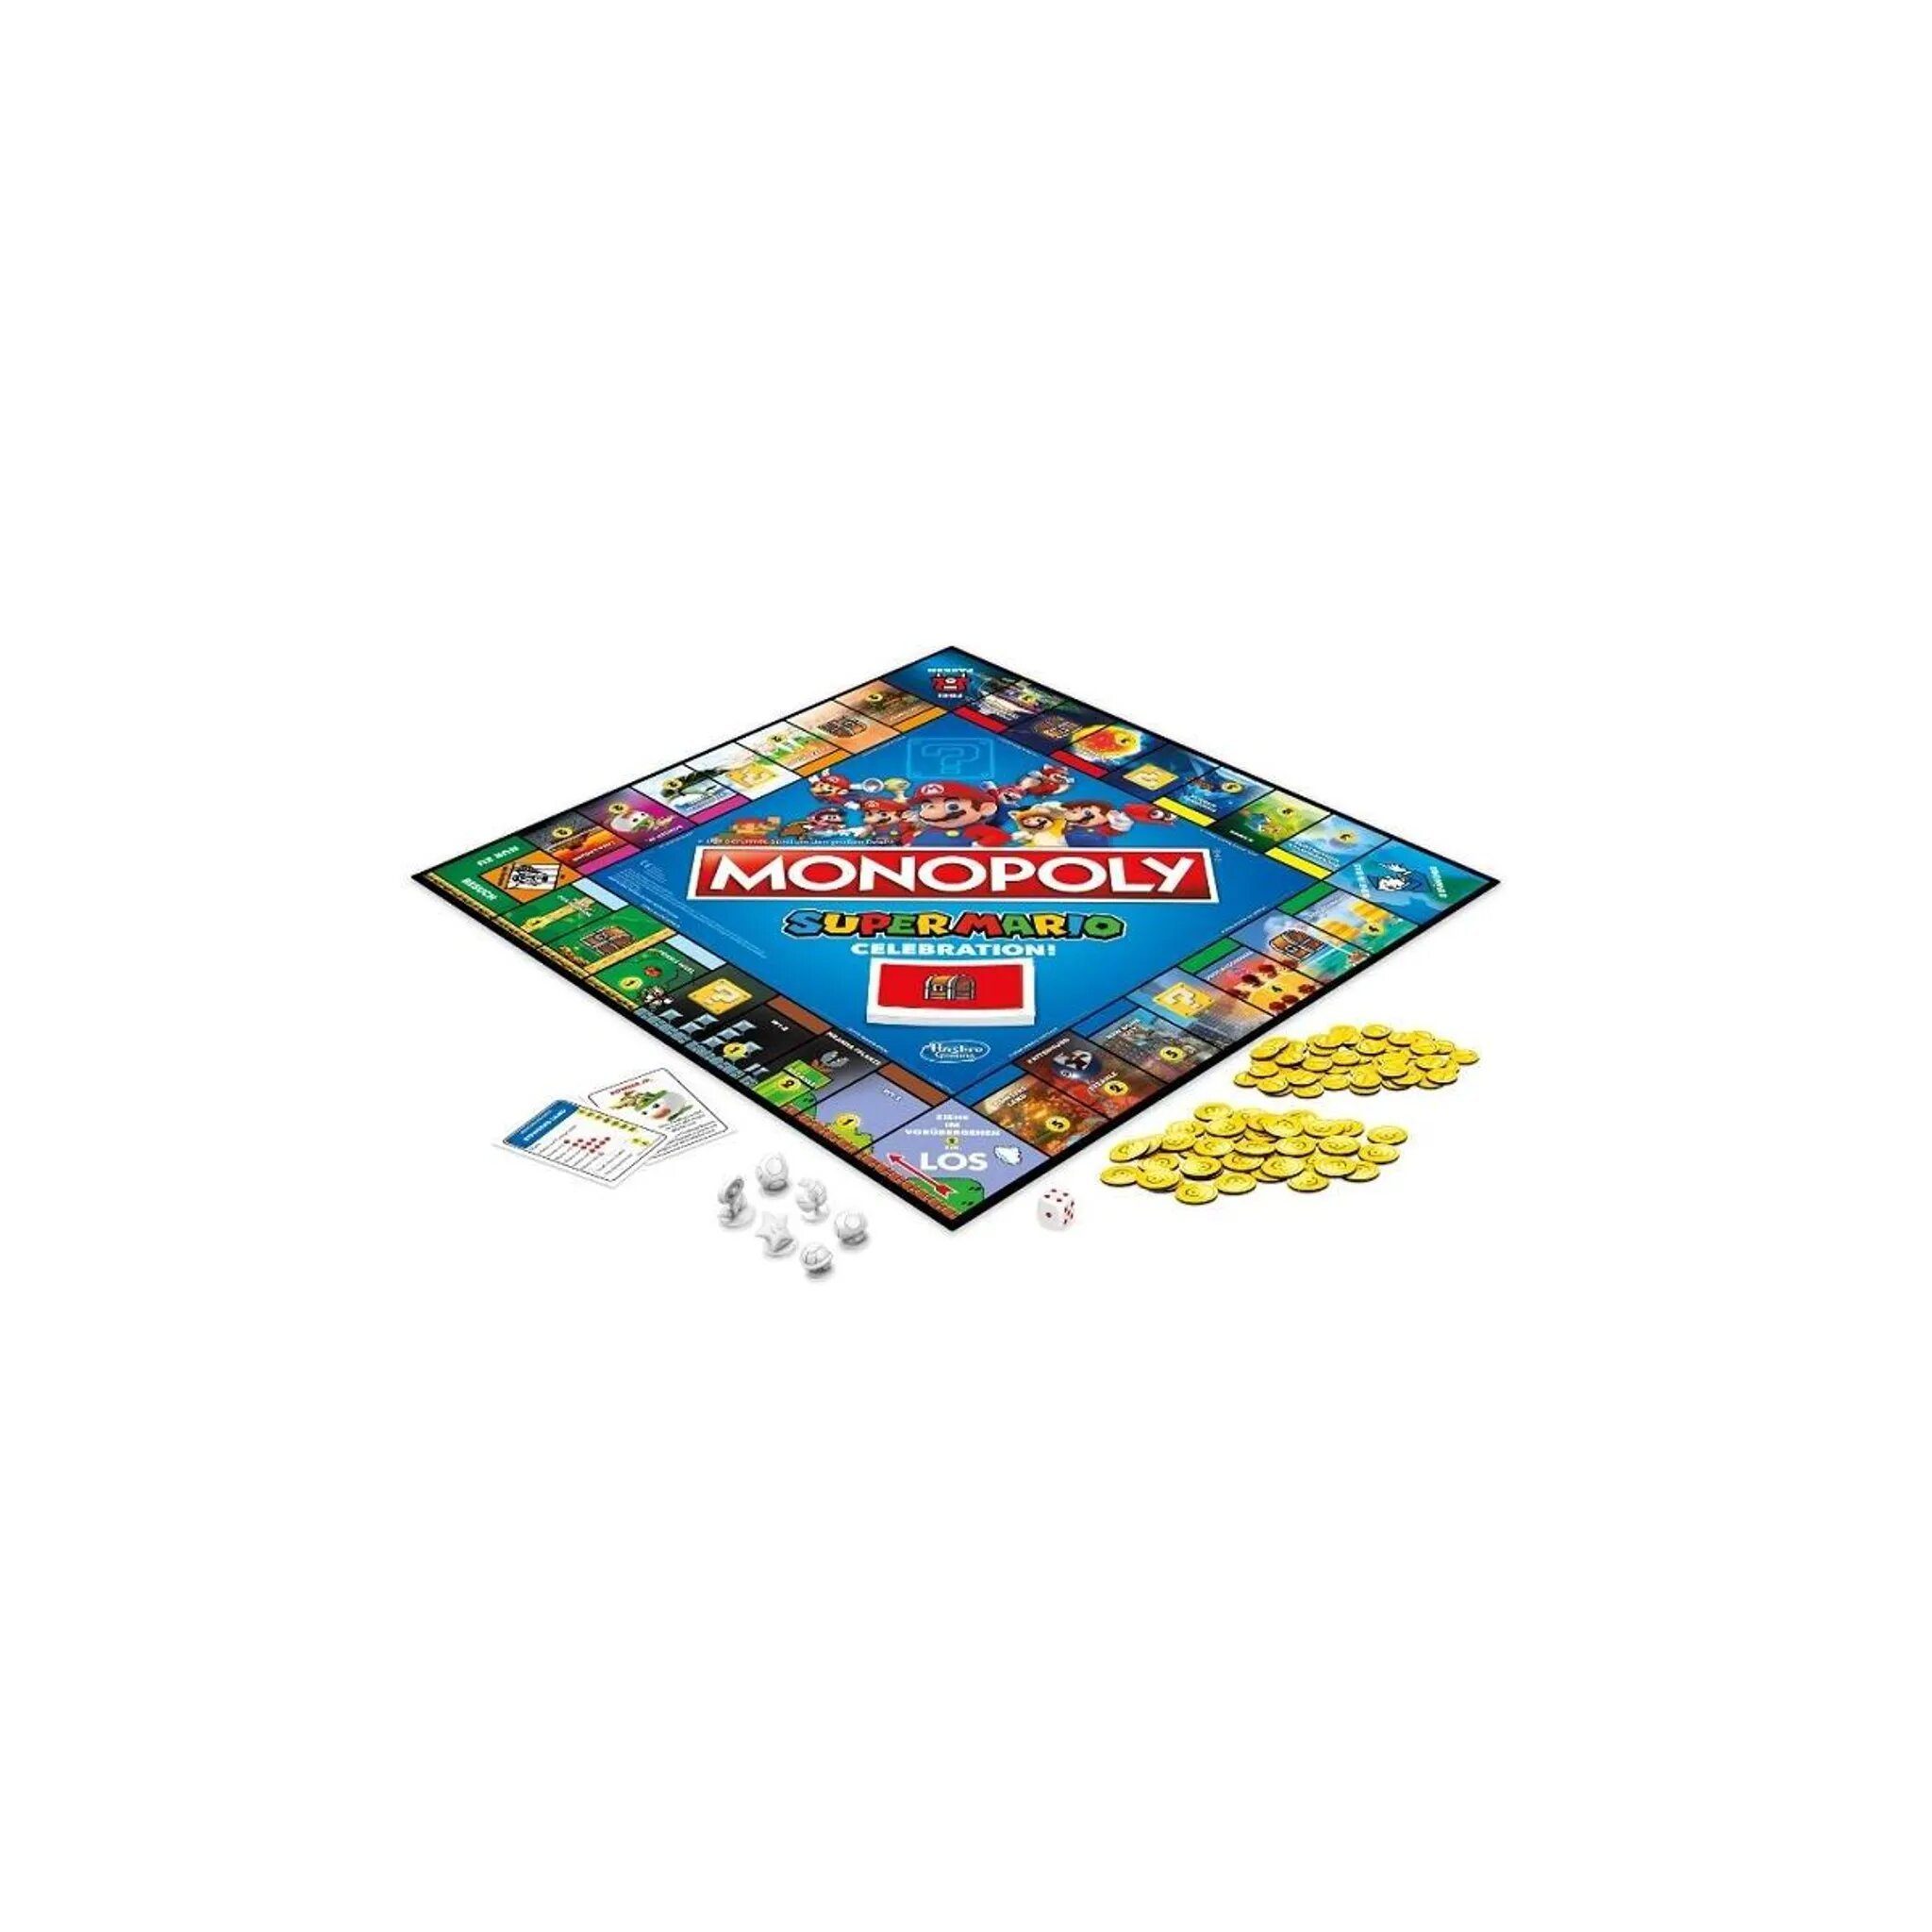 Hasbro Spiel, Brettspiel Monopoly original Celebration, Super Mario Sounds mit